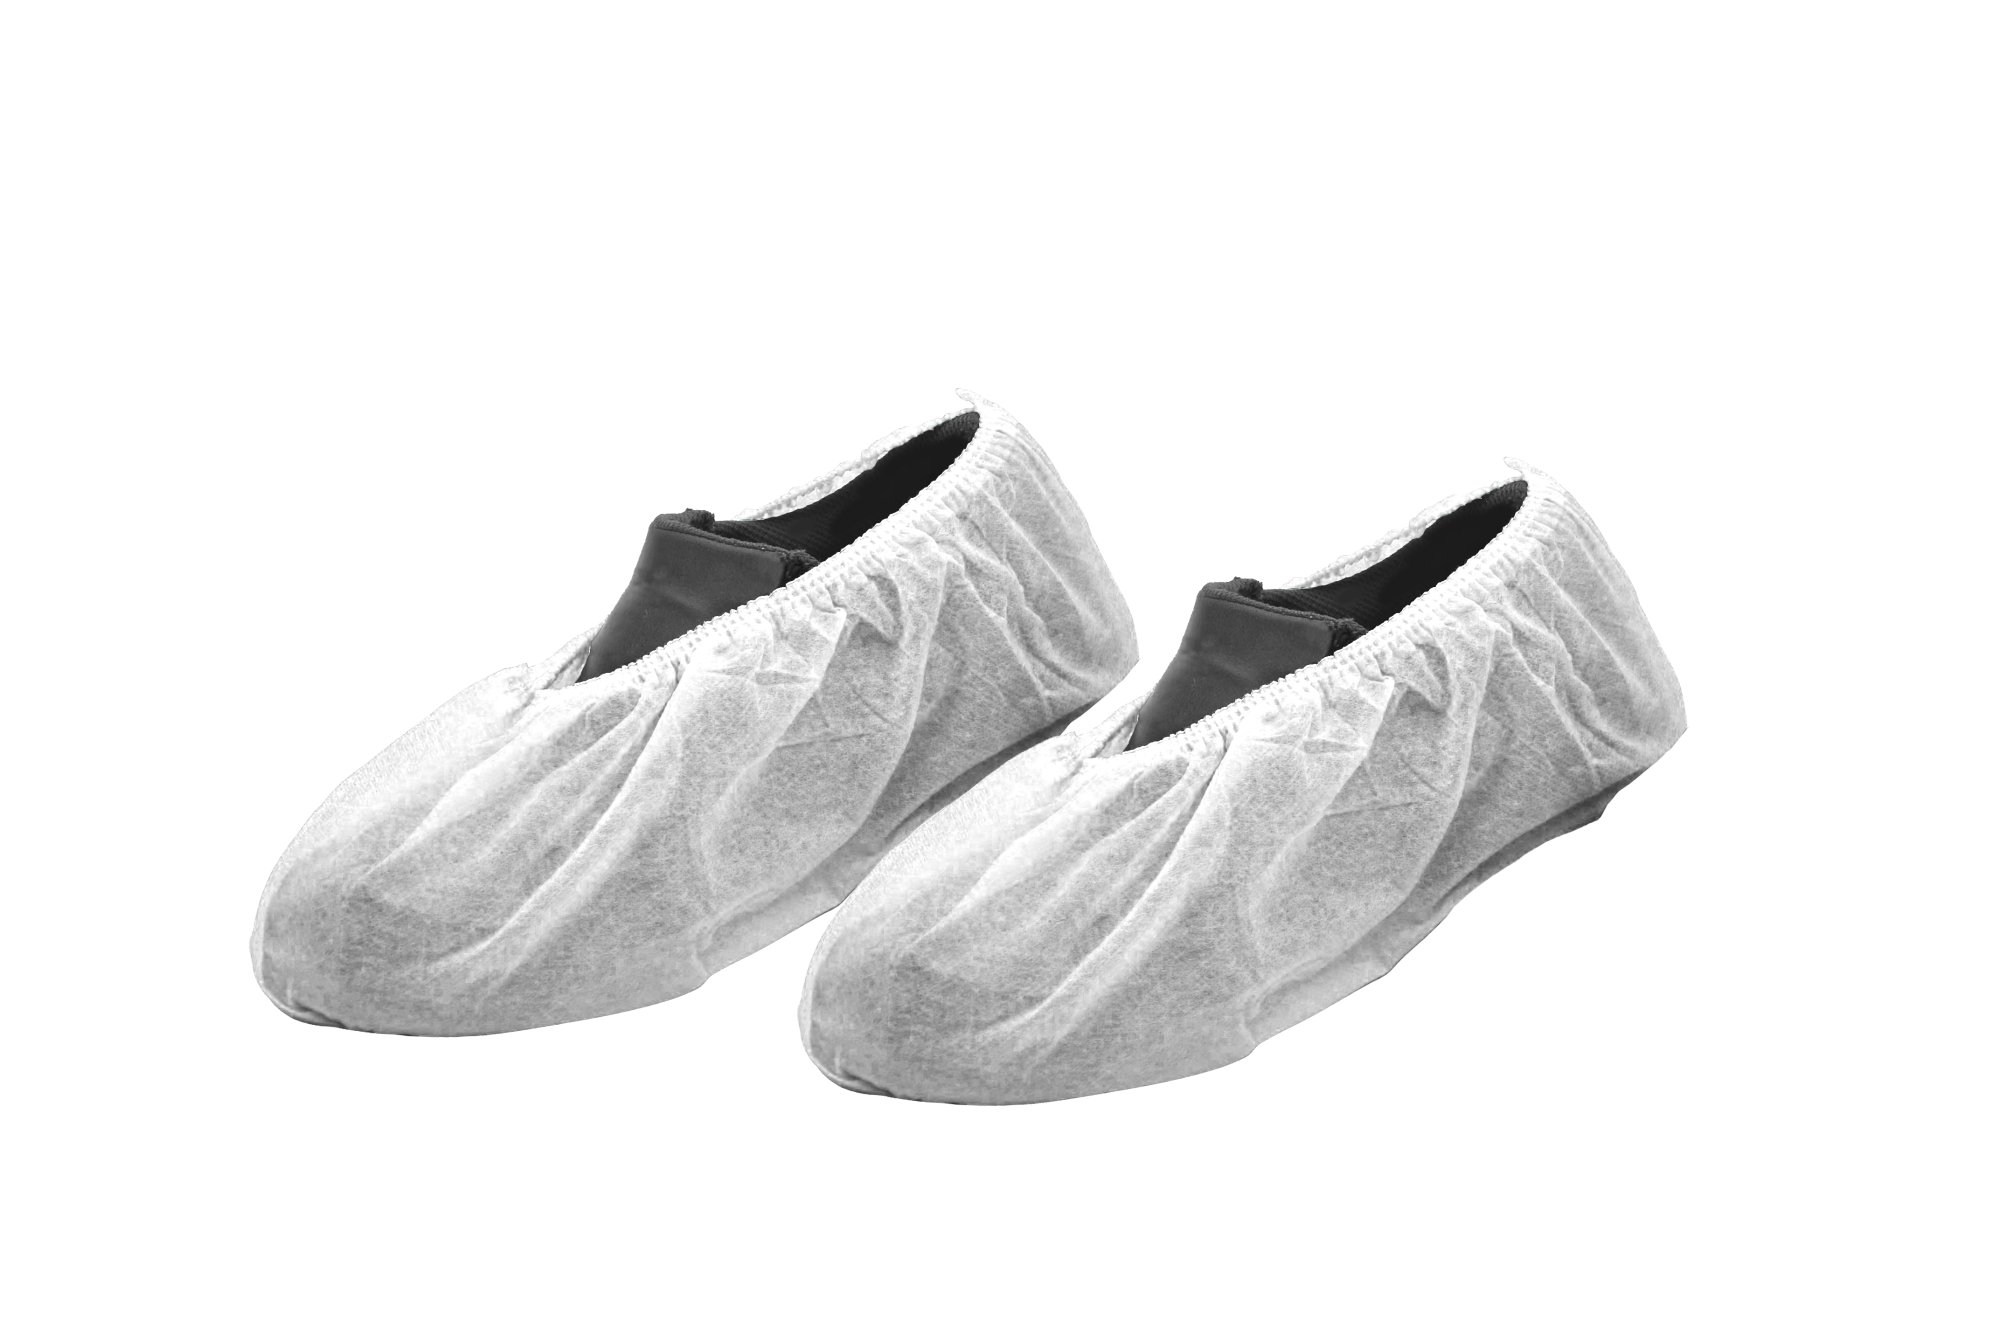 Cubrezapatos polietileno G.80 color blanco. Bolsa de 100 unidades